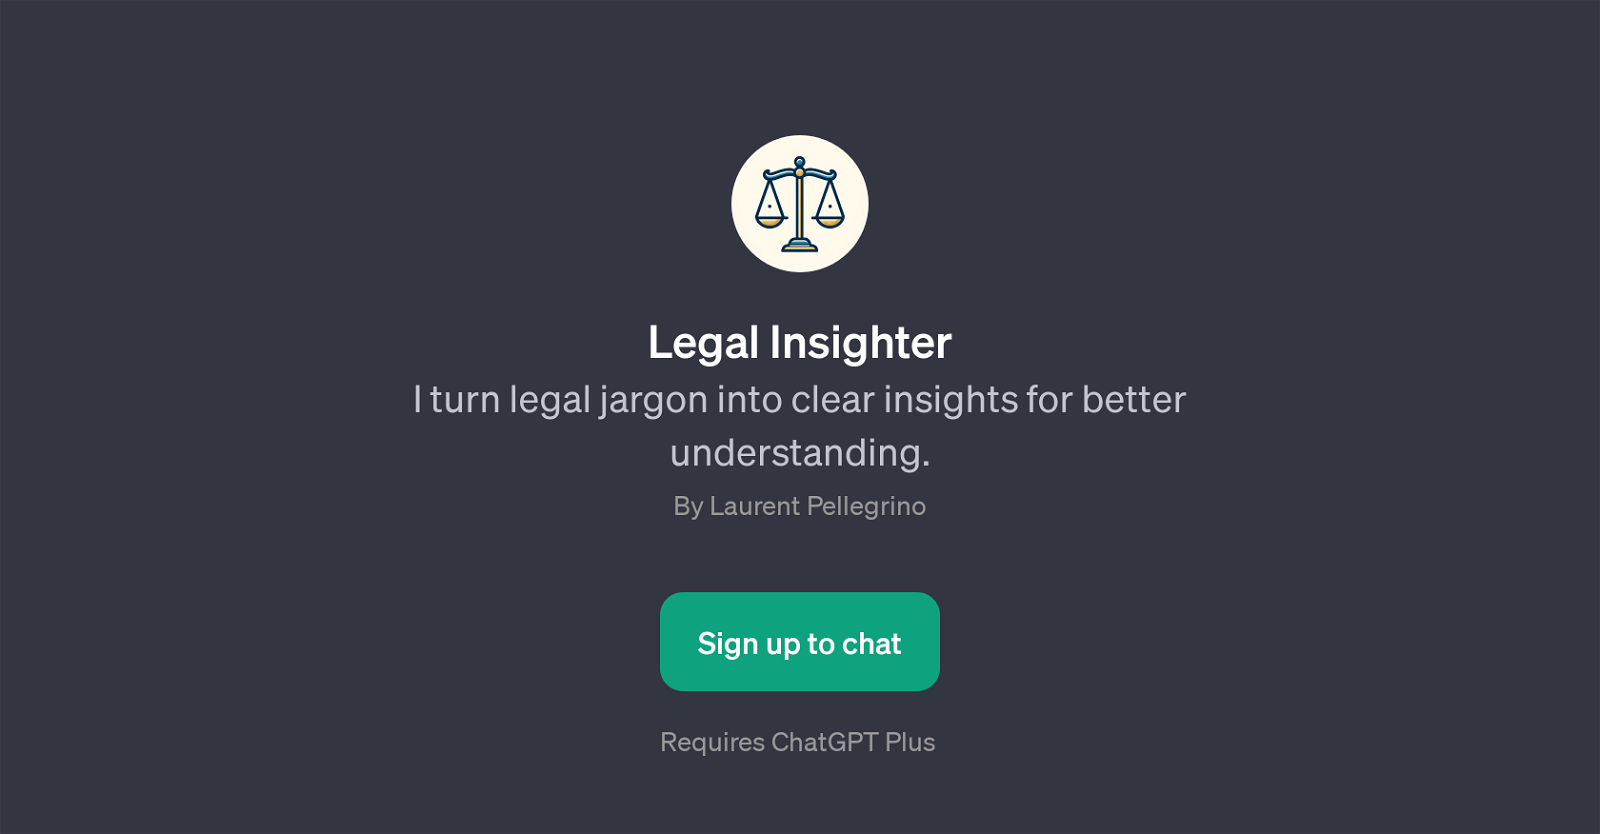 Legal Insighter website